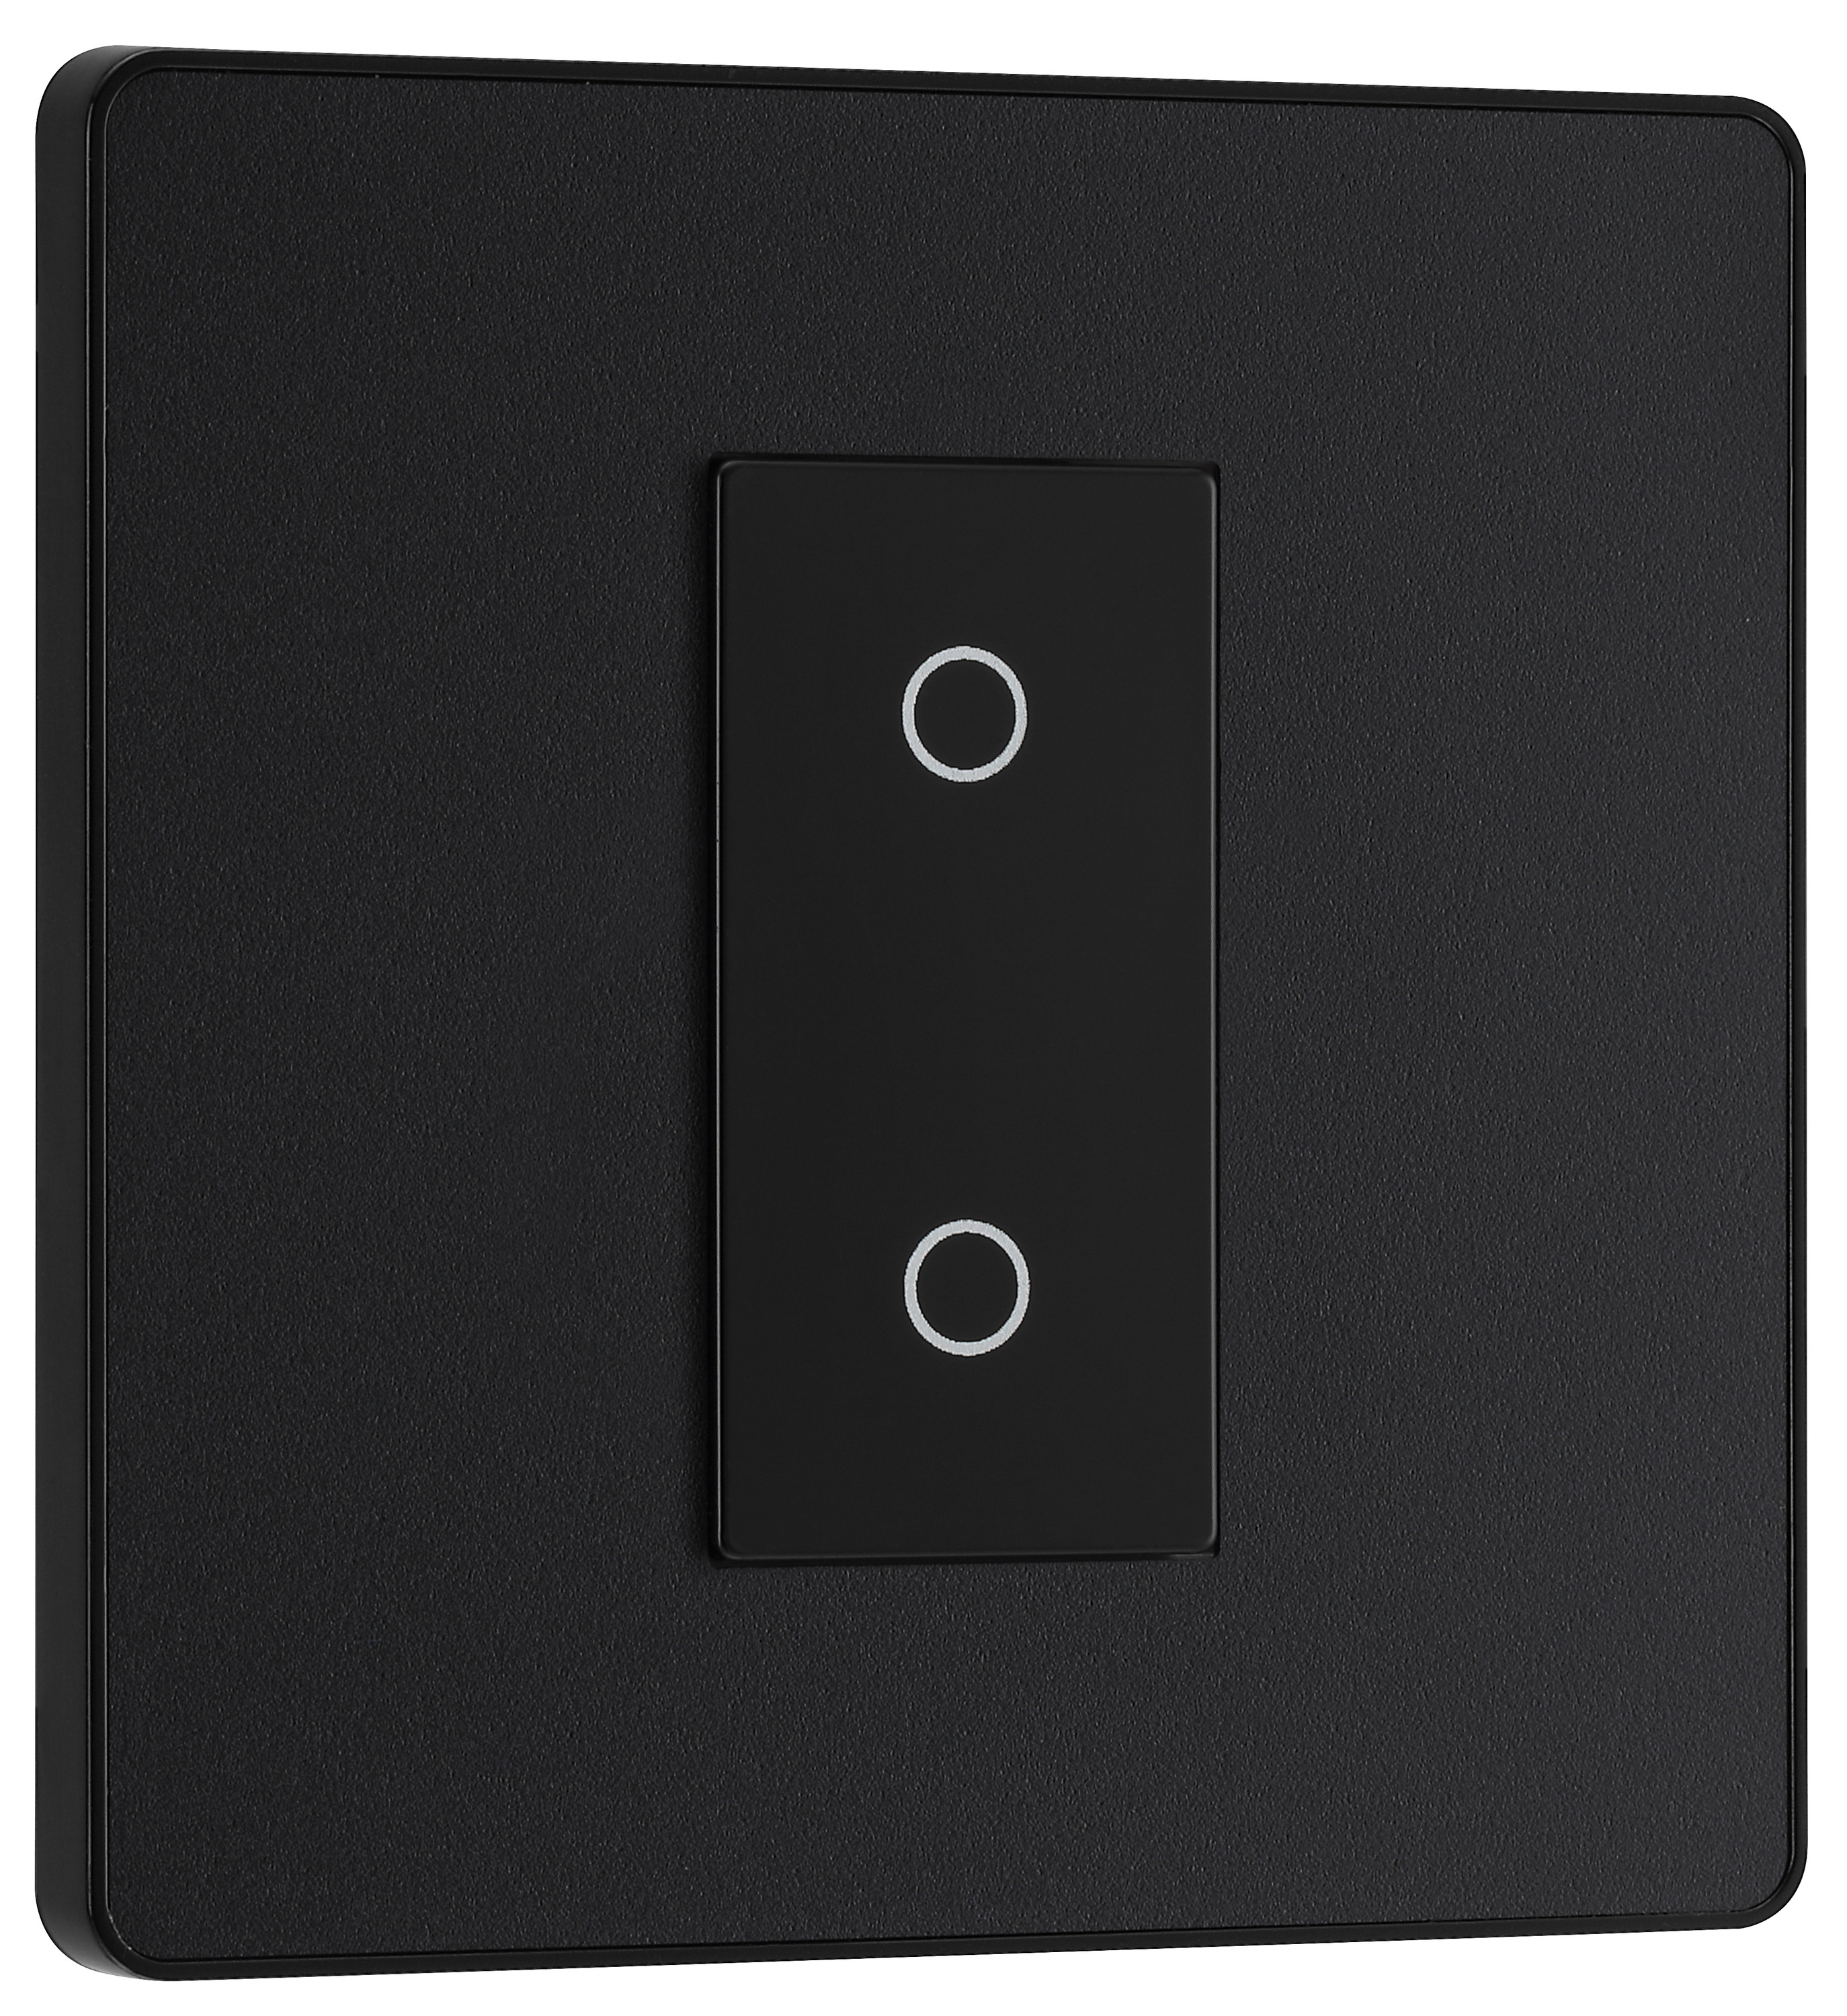 Image of BG Evolve Secondary Matt Black 2 Way Single Touch Dimmer Switch - 200W